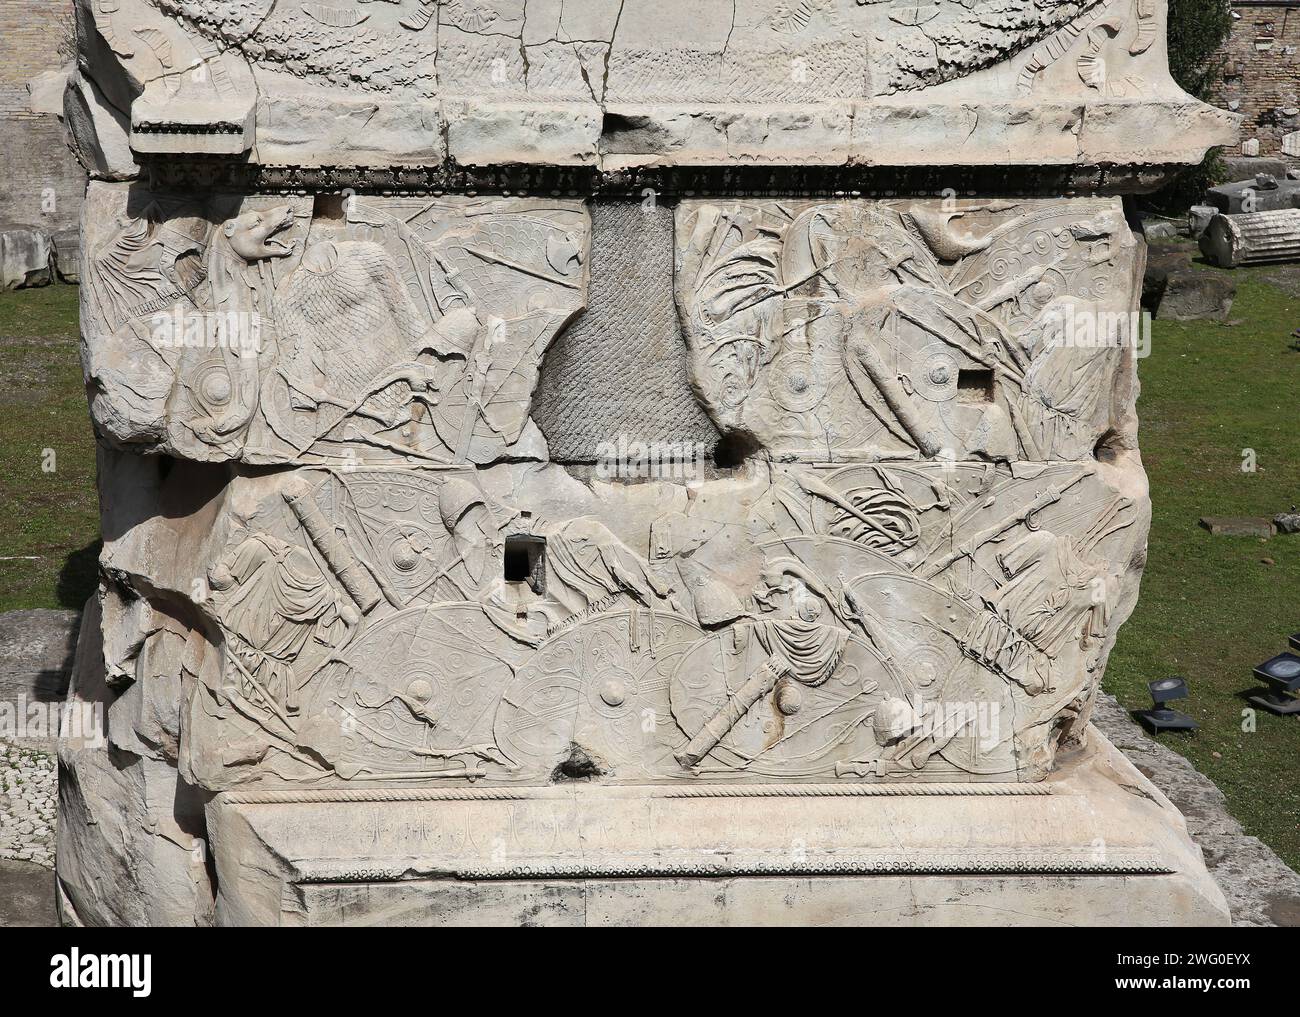 Italy. Rome. Trajan's Column. Roman triumphal column. Base with war trophies. Dacian Wars (2nd century). Stock Photo